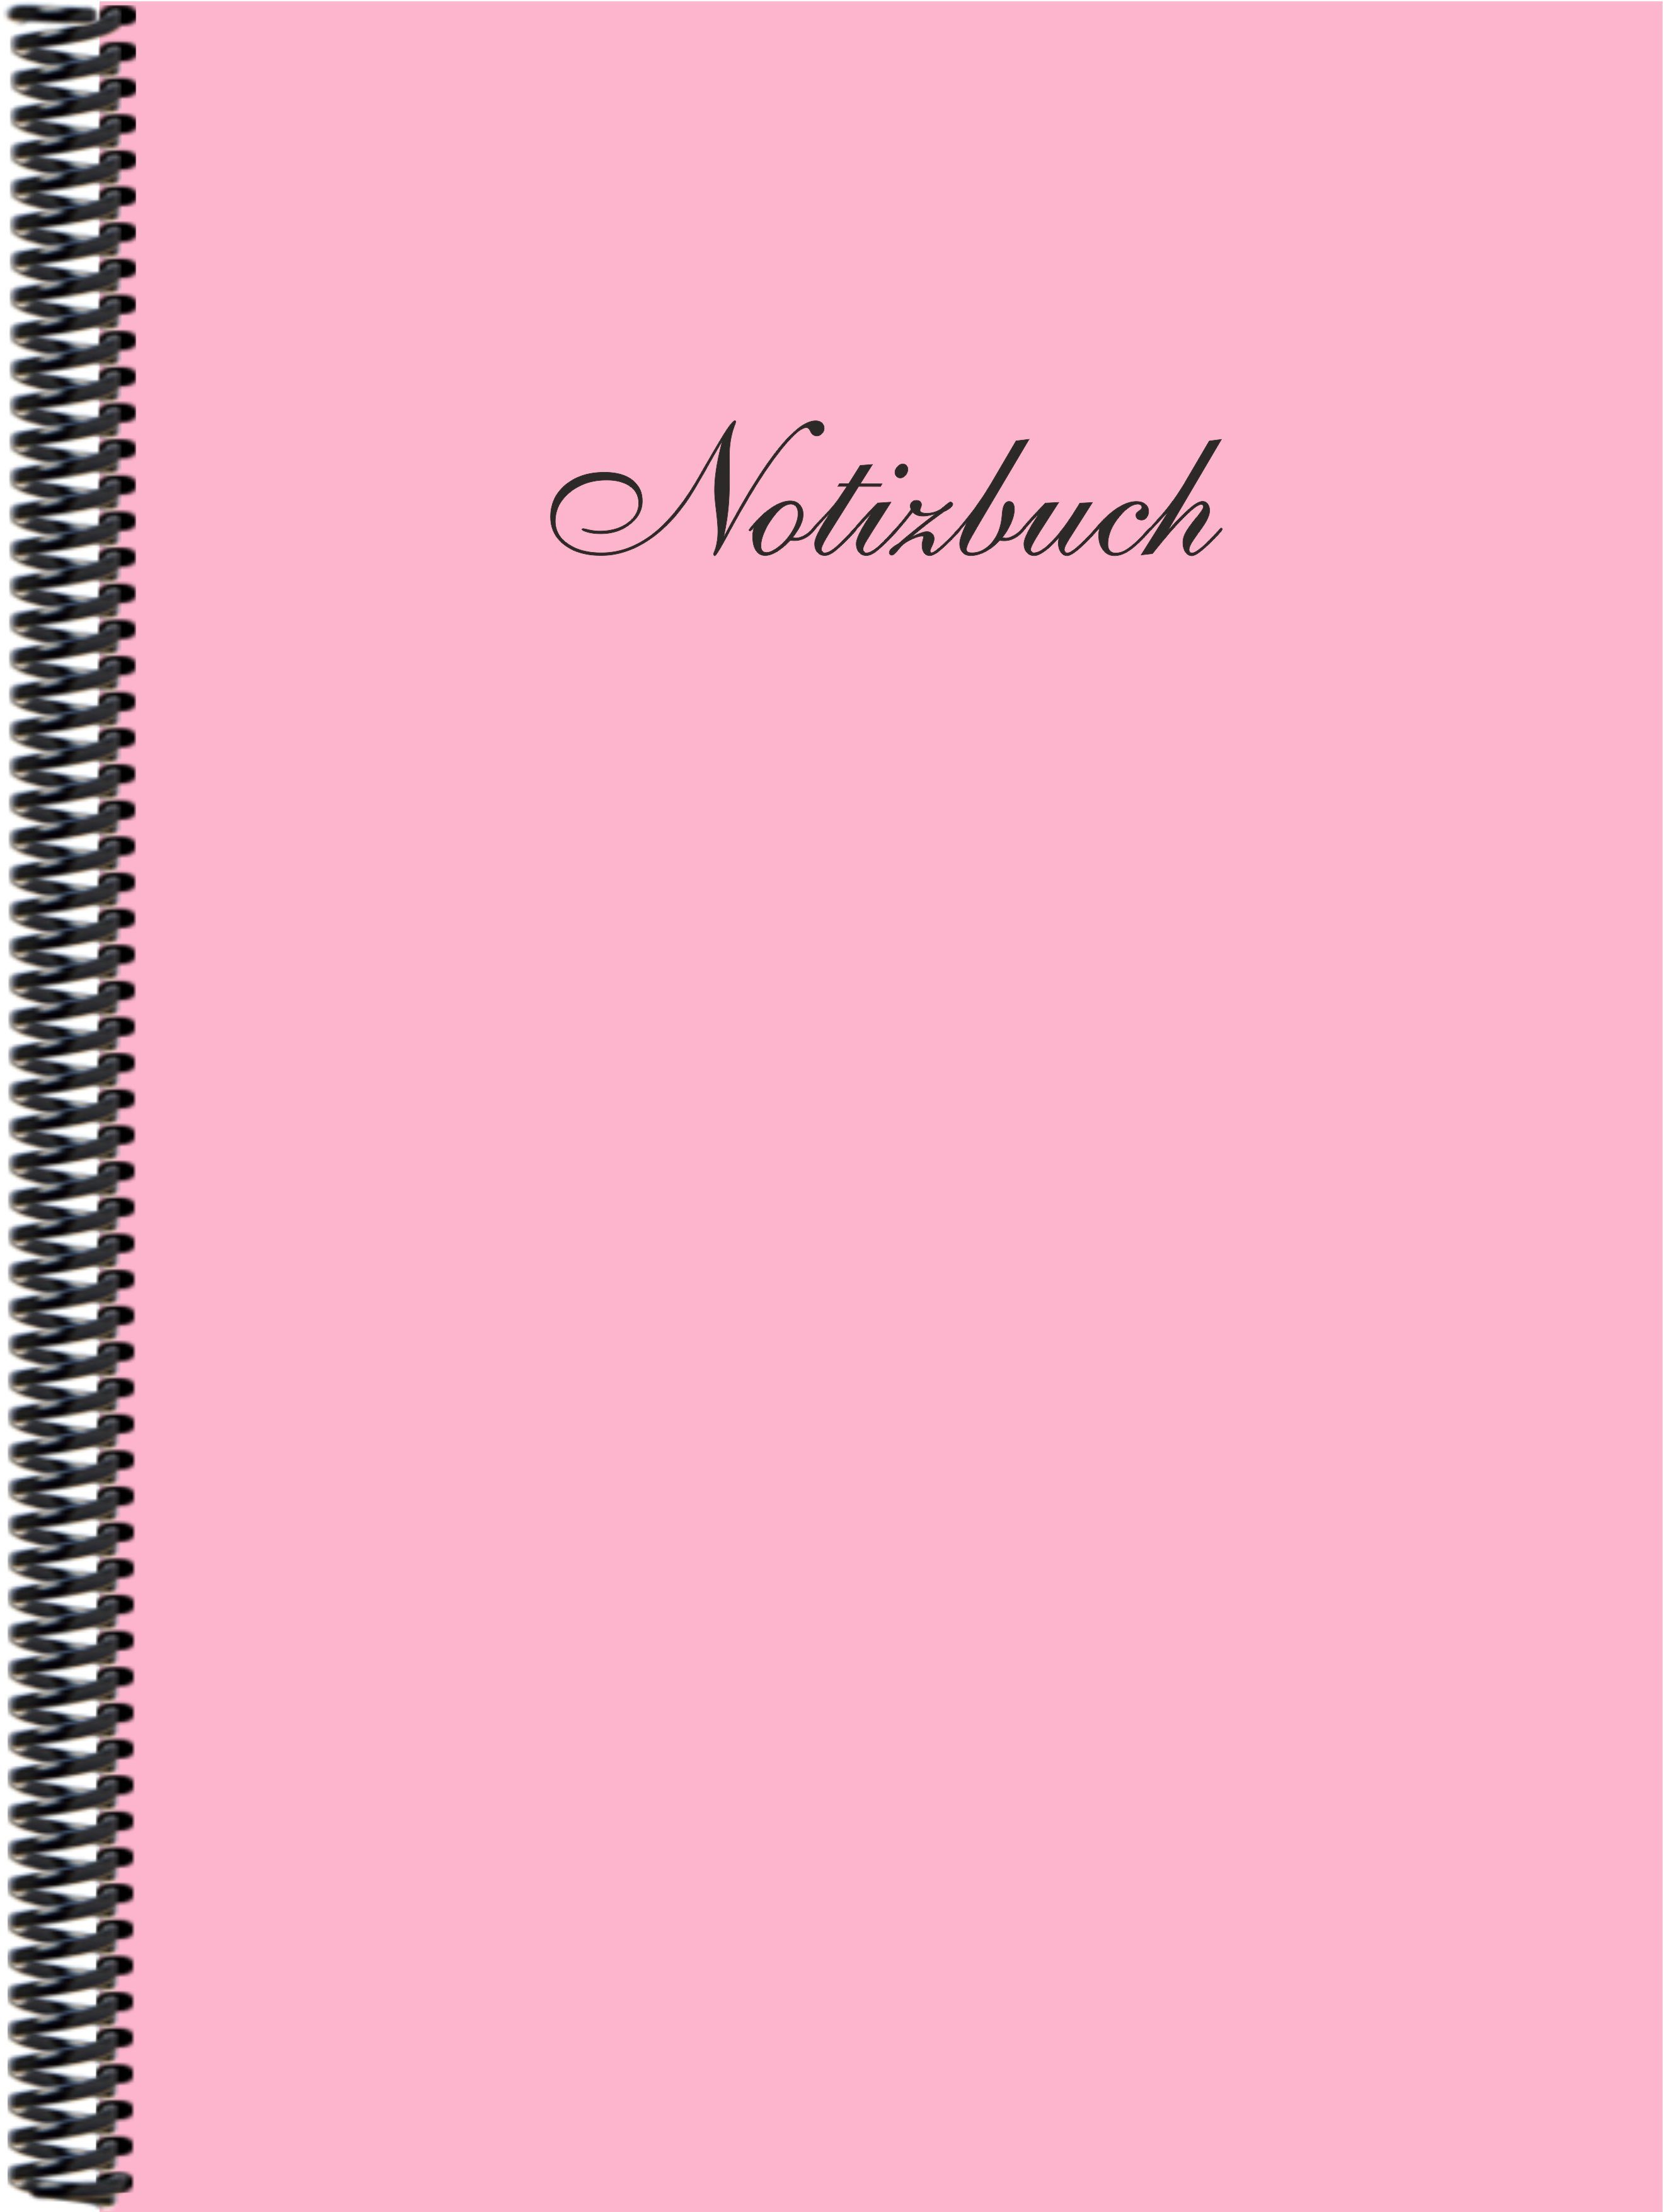 Trendfarbe Notizbuch der Verlag rosa kariert, Notizbuch DINA4 Gmbh E&Z in